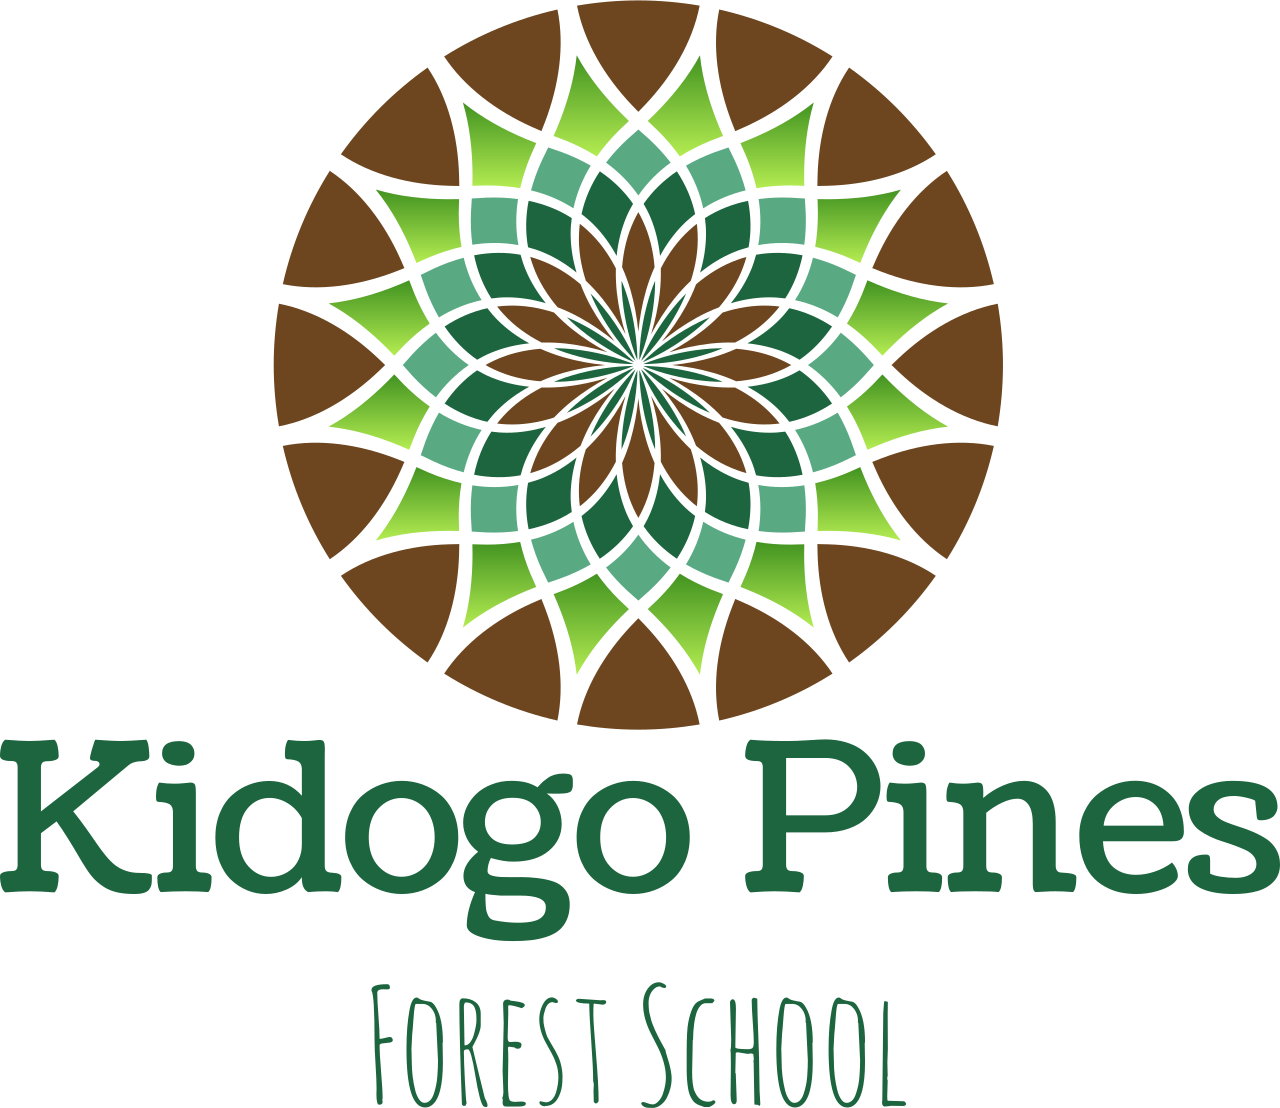 Kidogo Pines's web page